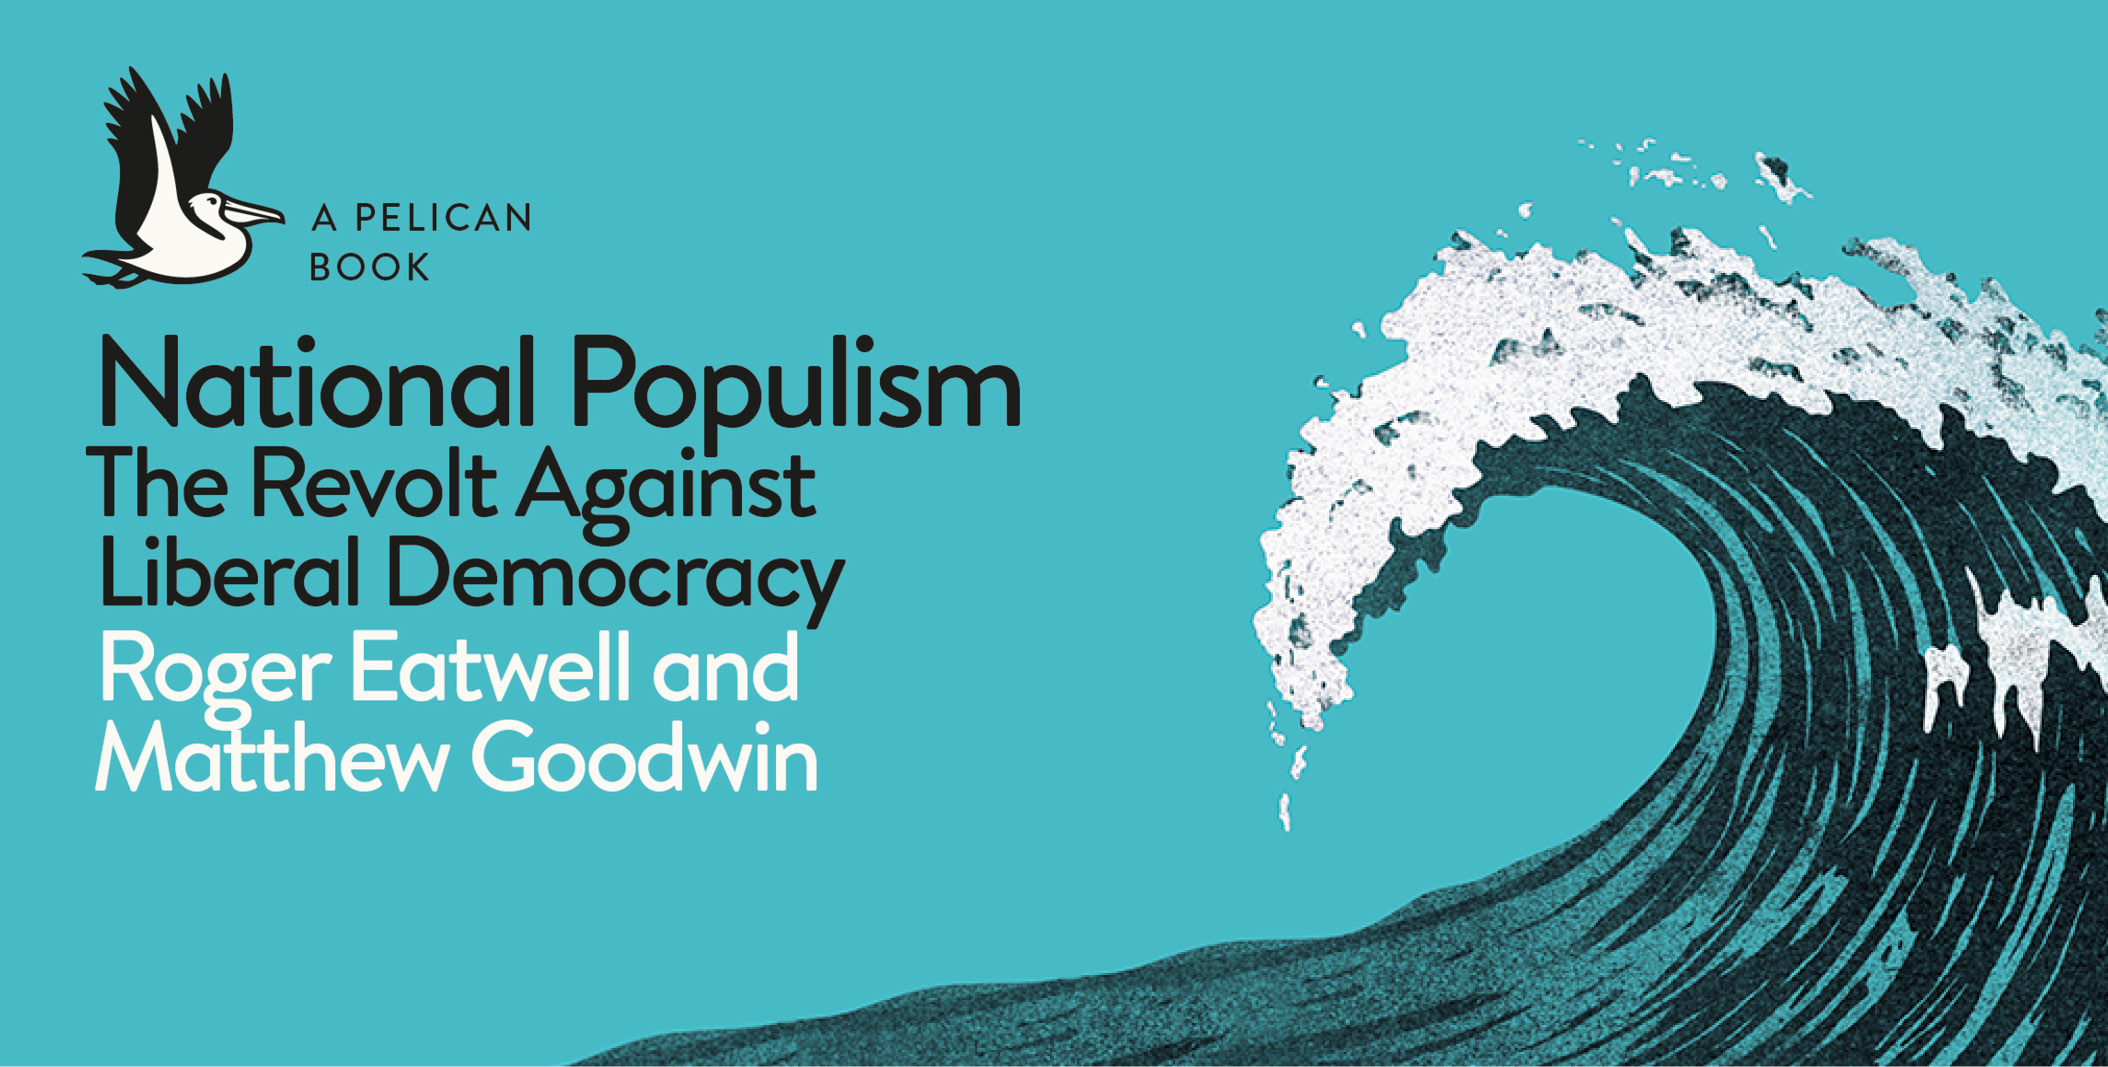 National Populism events